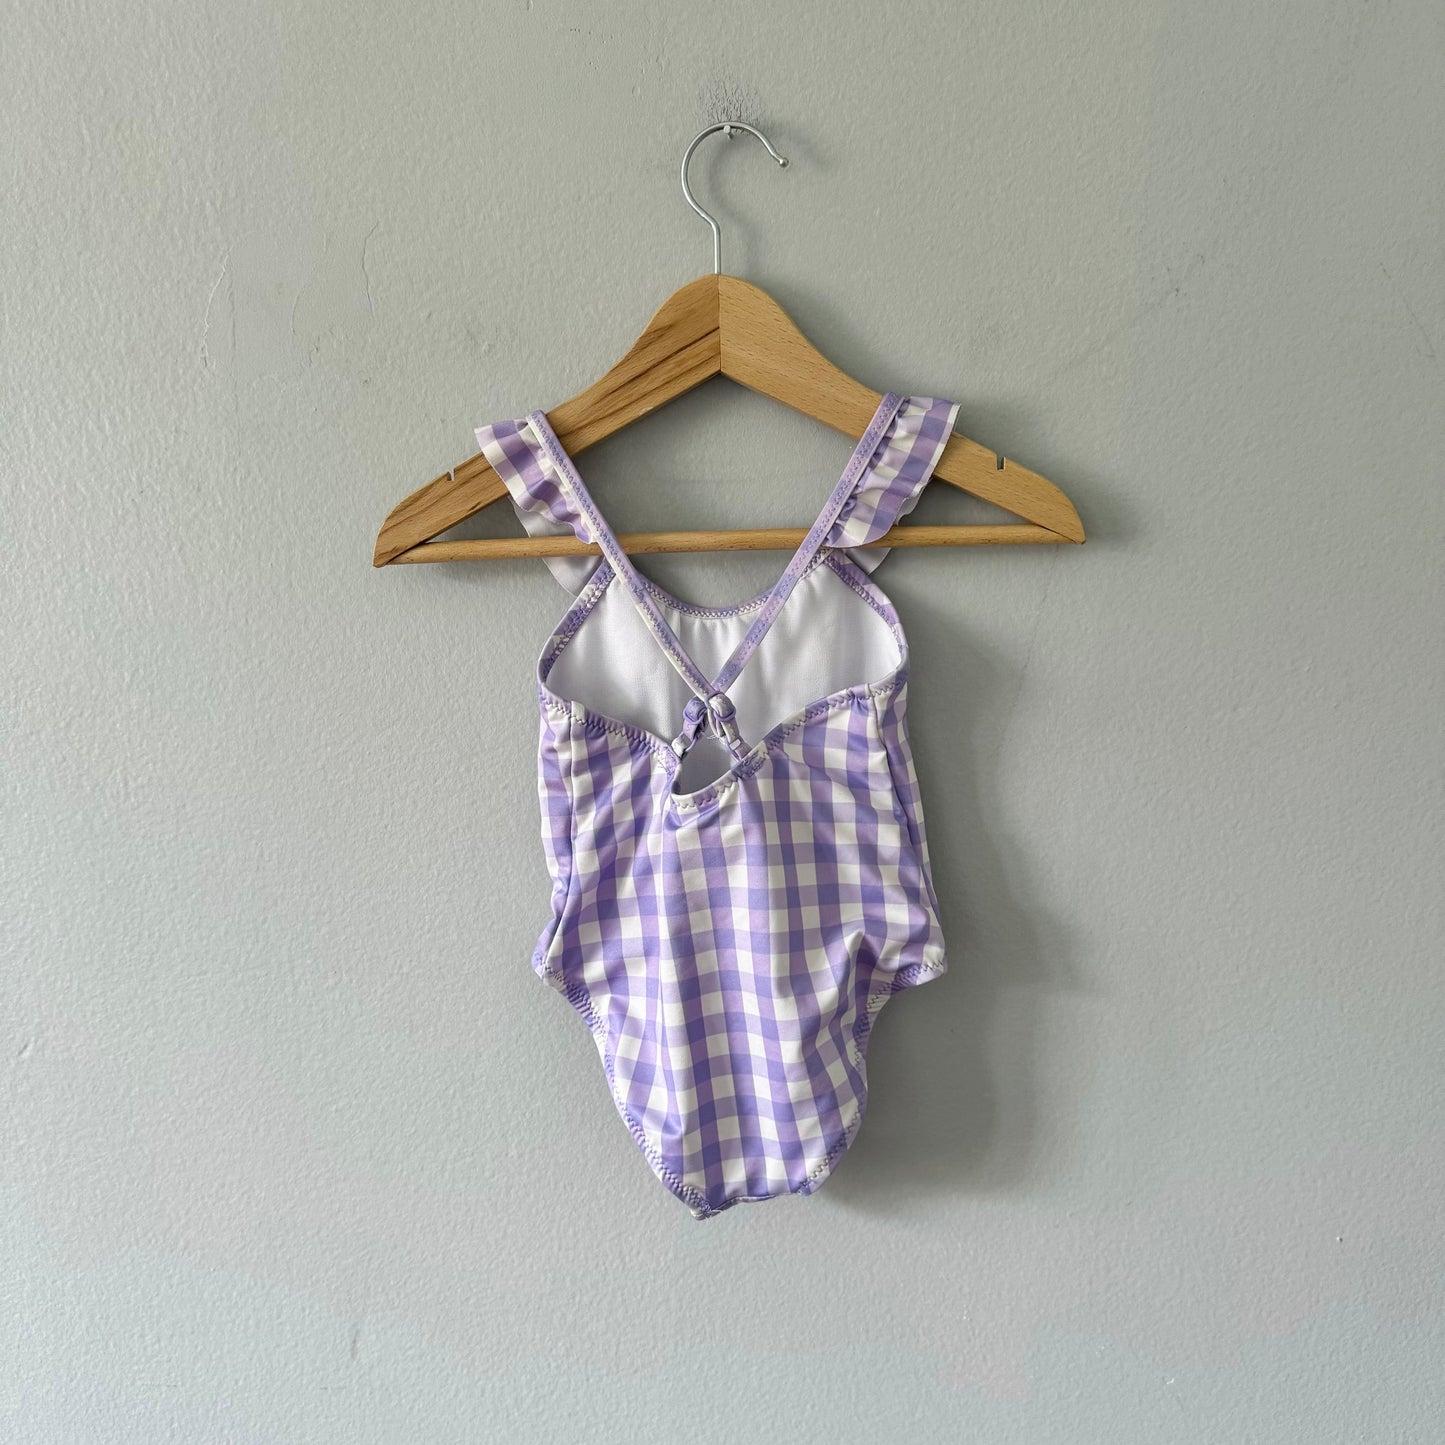 Zara / Purple/white gingham bathing suit / 6-12M